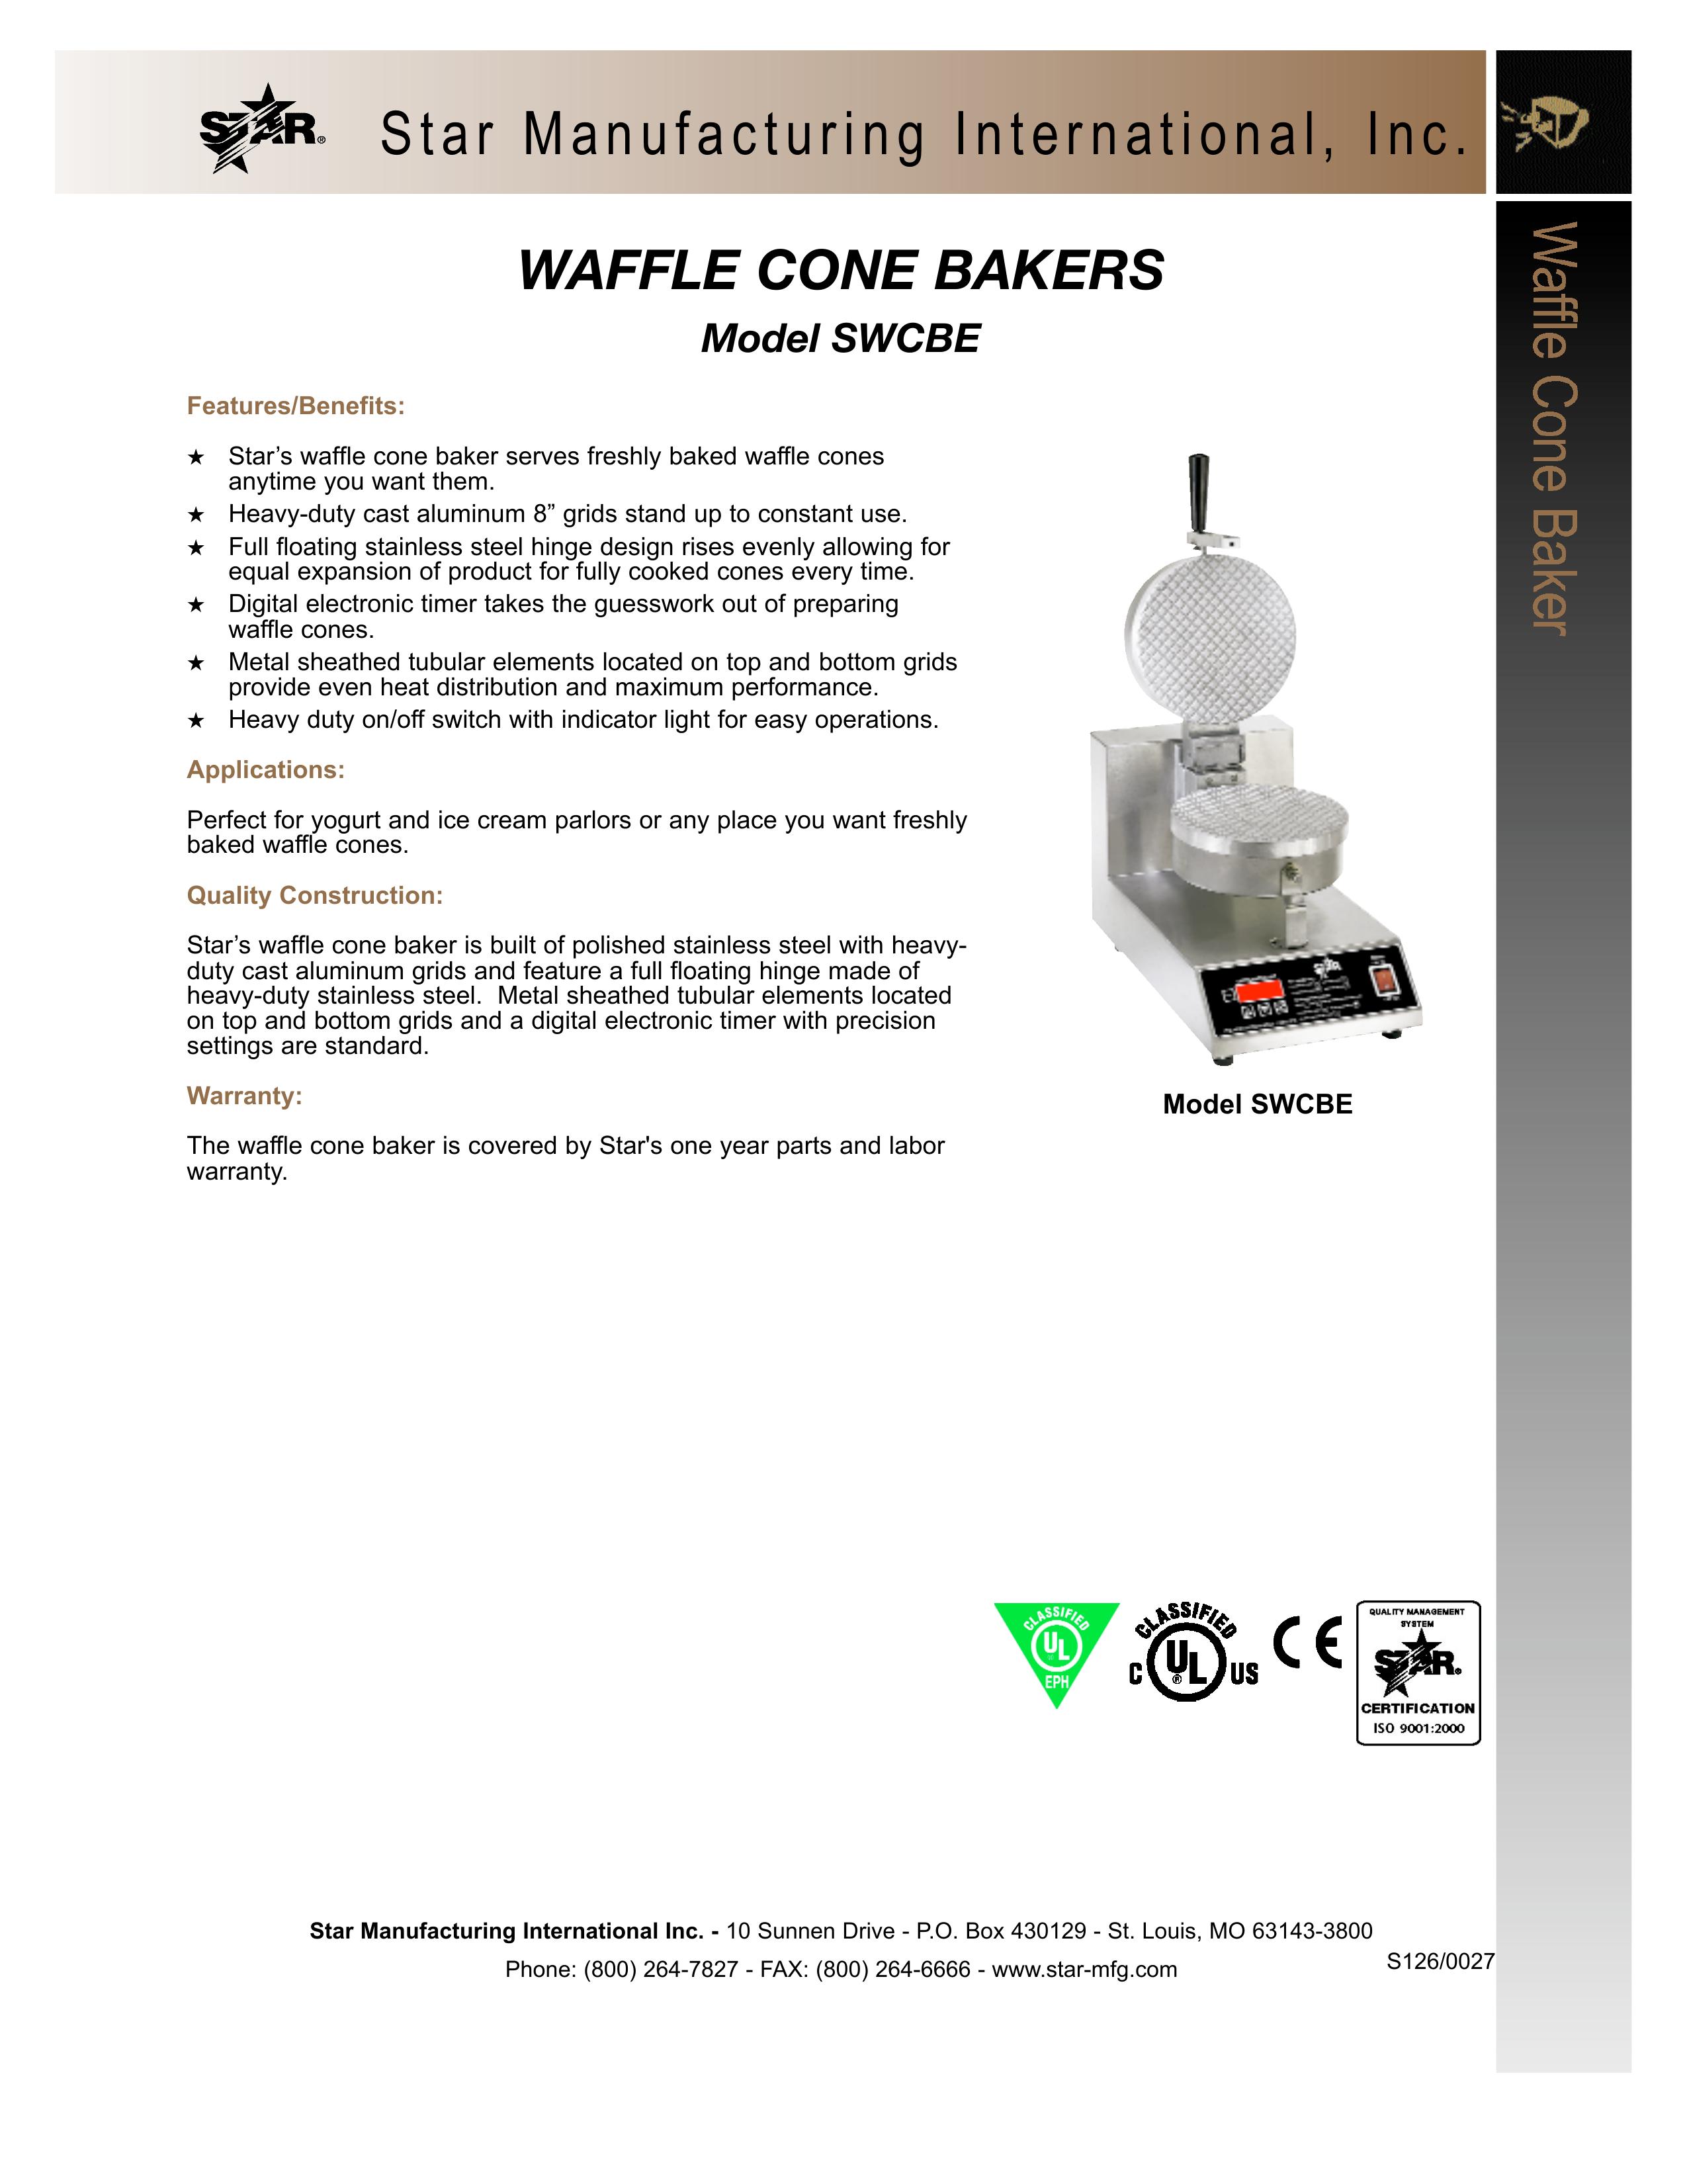 Star Manufacturing SWCBE Waffle Iron User Manual